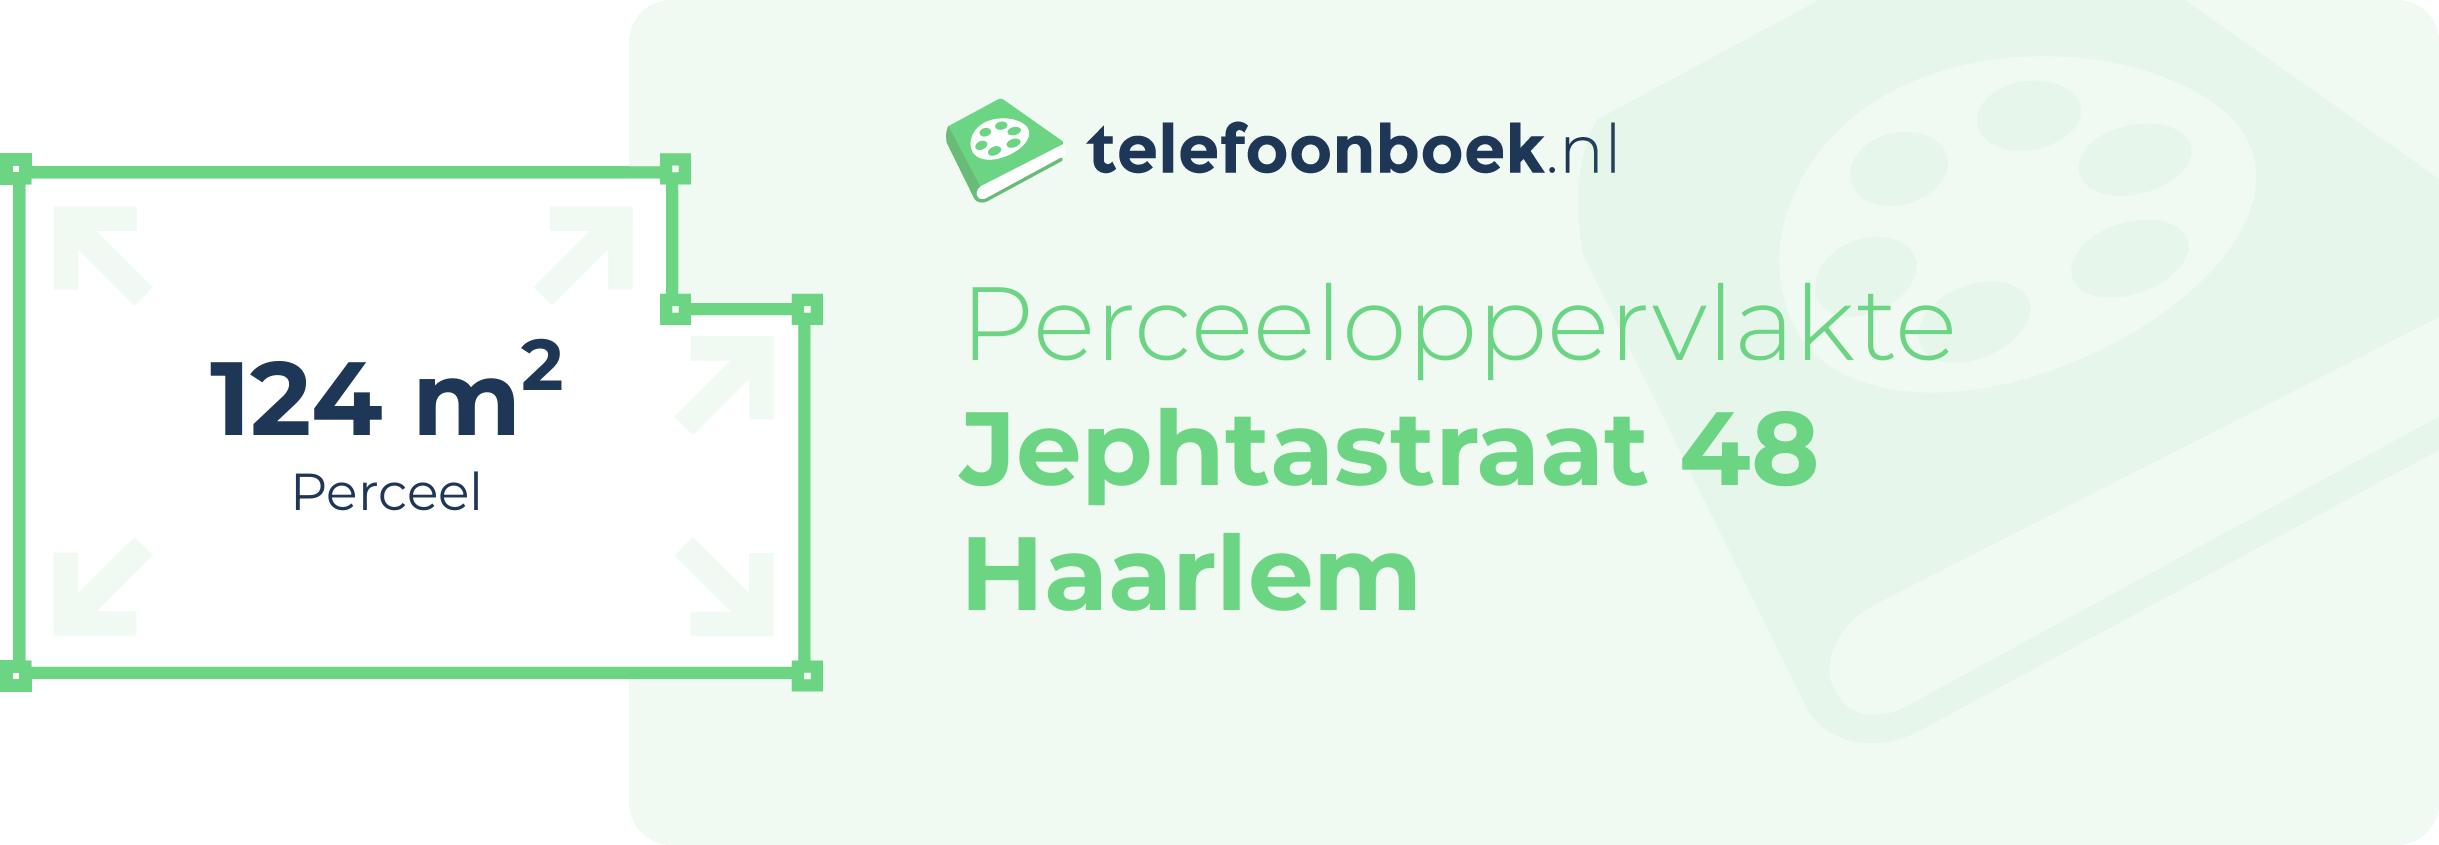 Perceeloppervlakte Jephtastraat 48 Haarlem